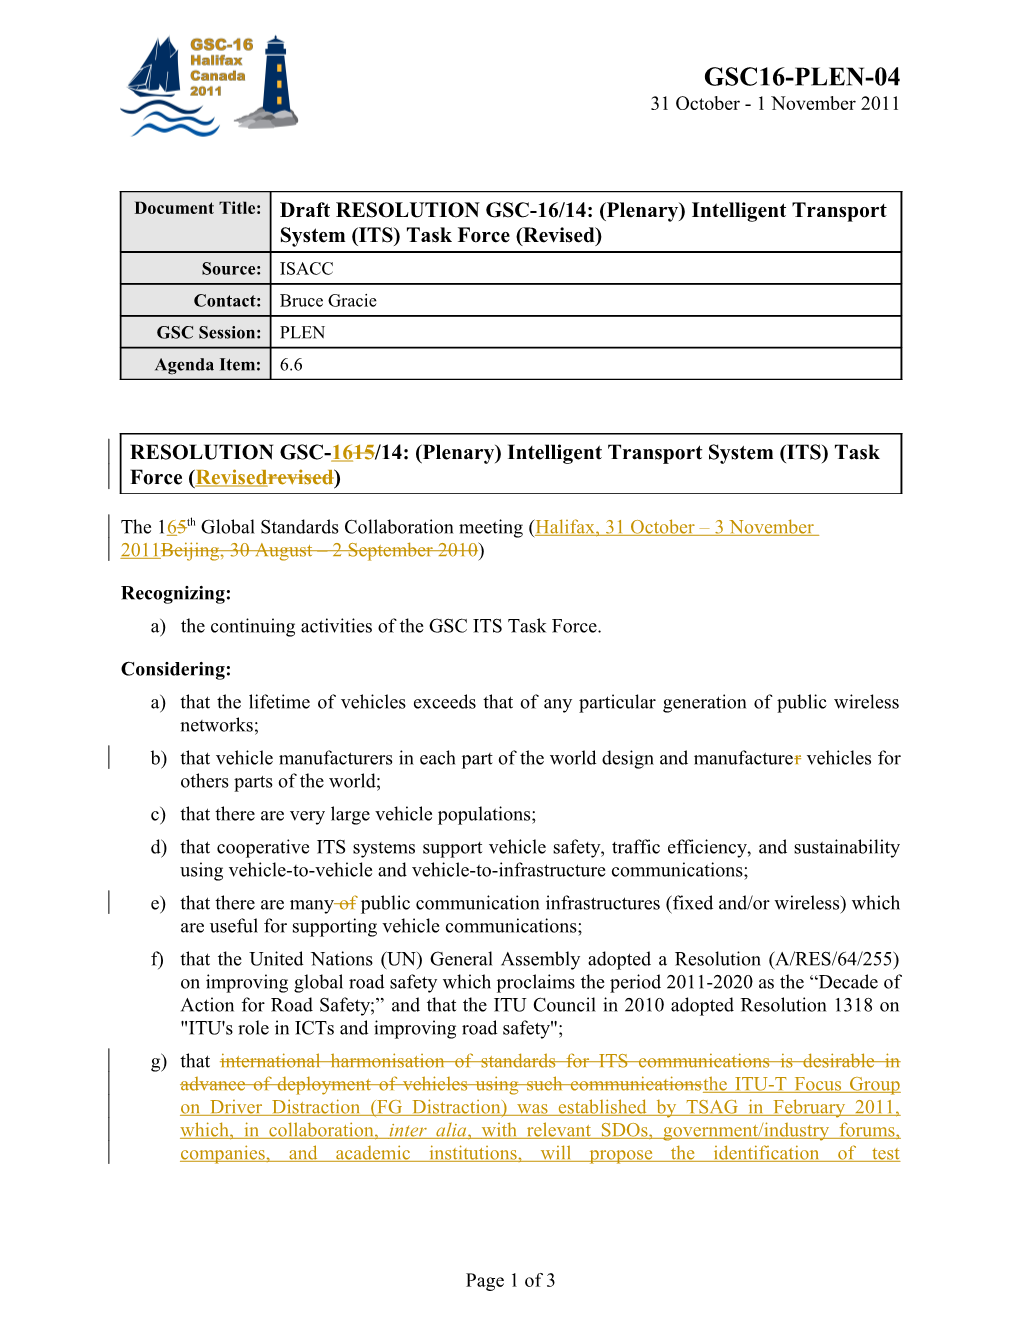 Draft RESOLUTION GSC-16/14: (Plenary) Intelligent Transport System (ITS) Task Force (Revised)